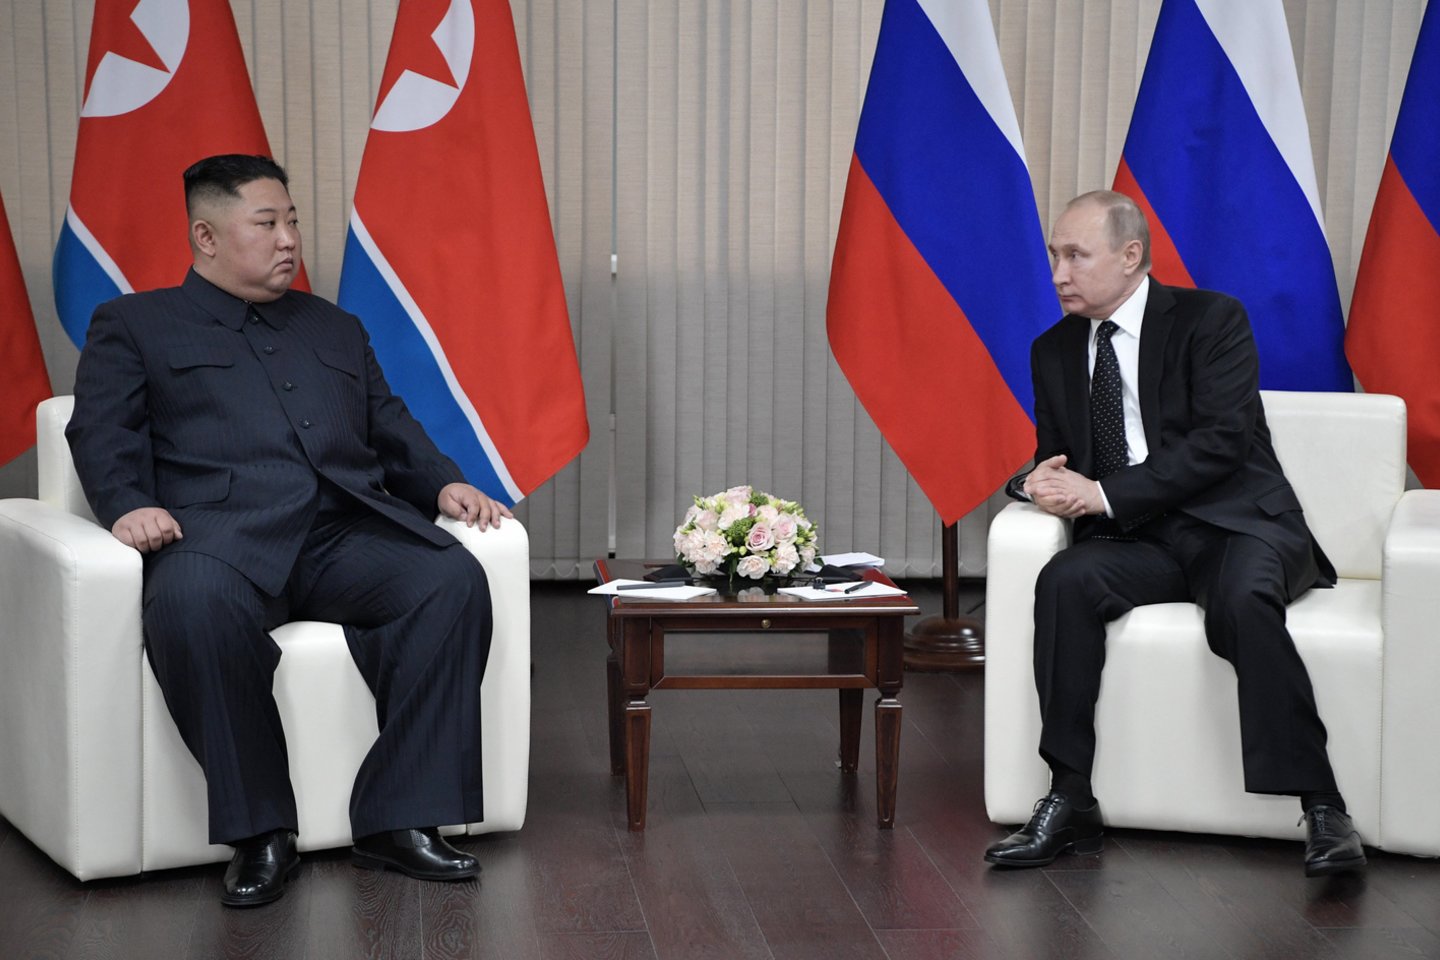 V.Putinas susitiko su Kim Jong-unu.<br>Sputnik/Scanpix nuotr.